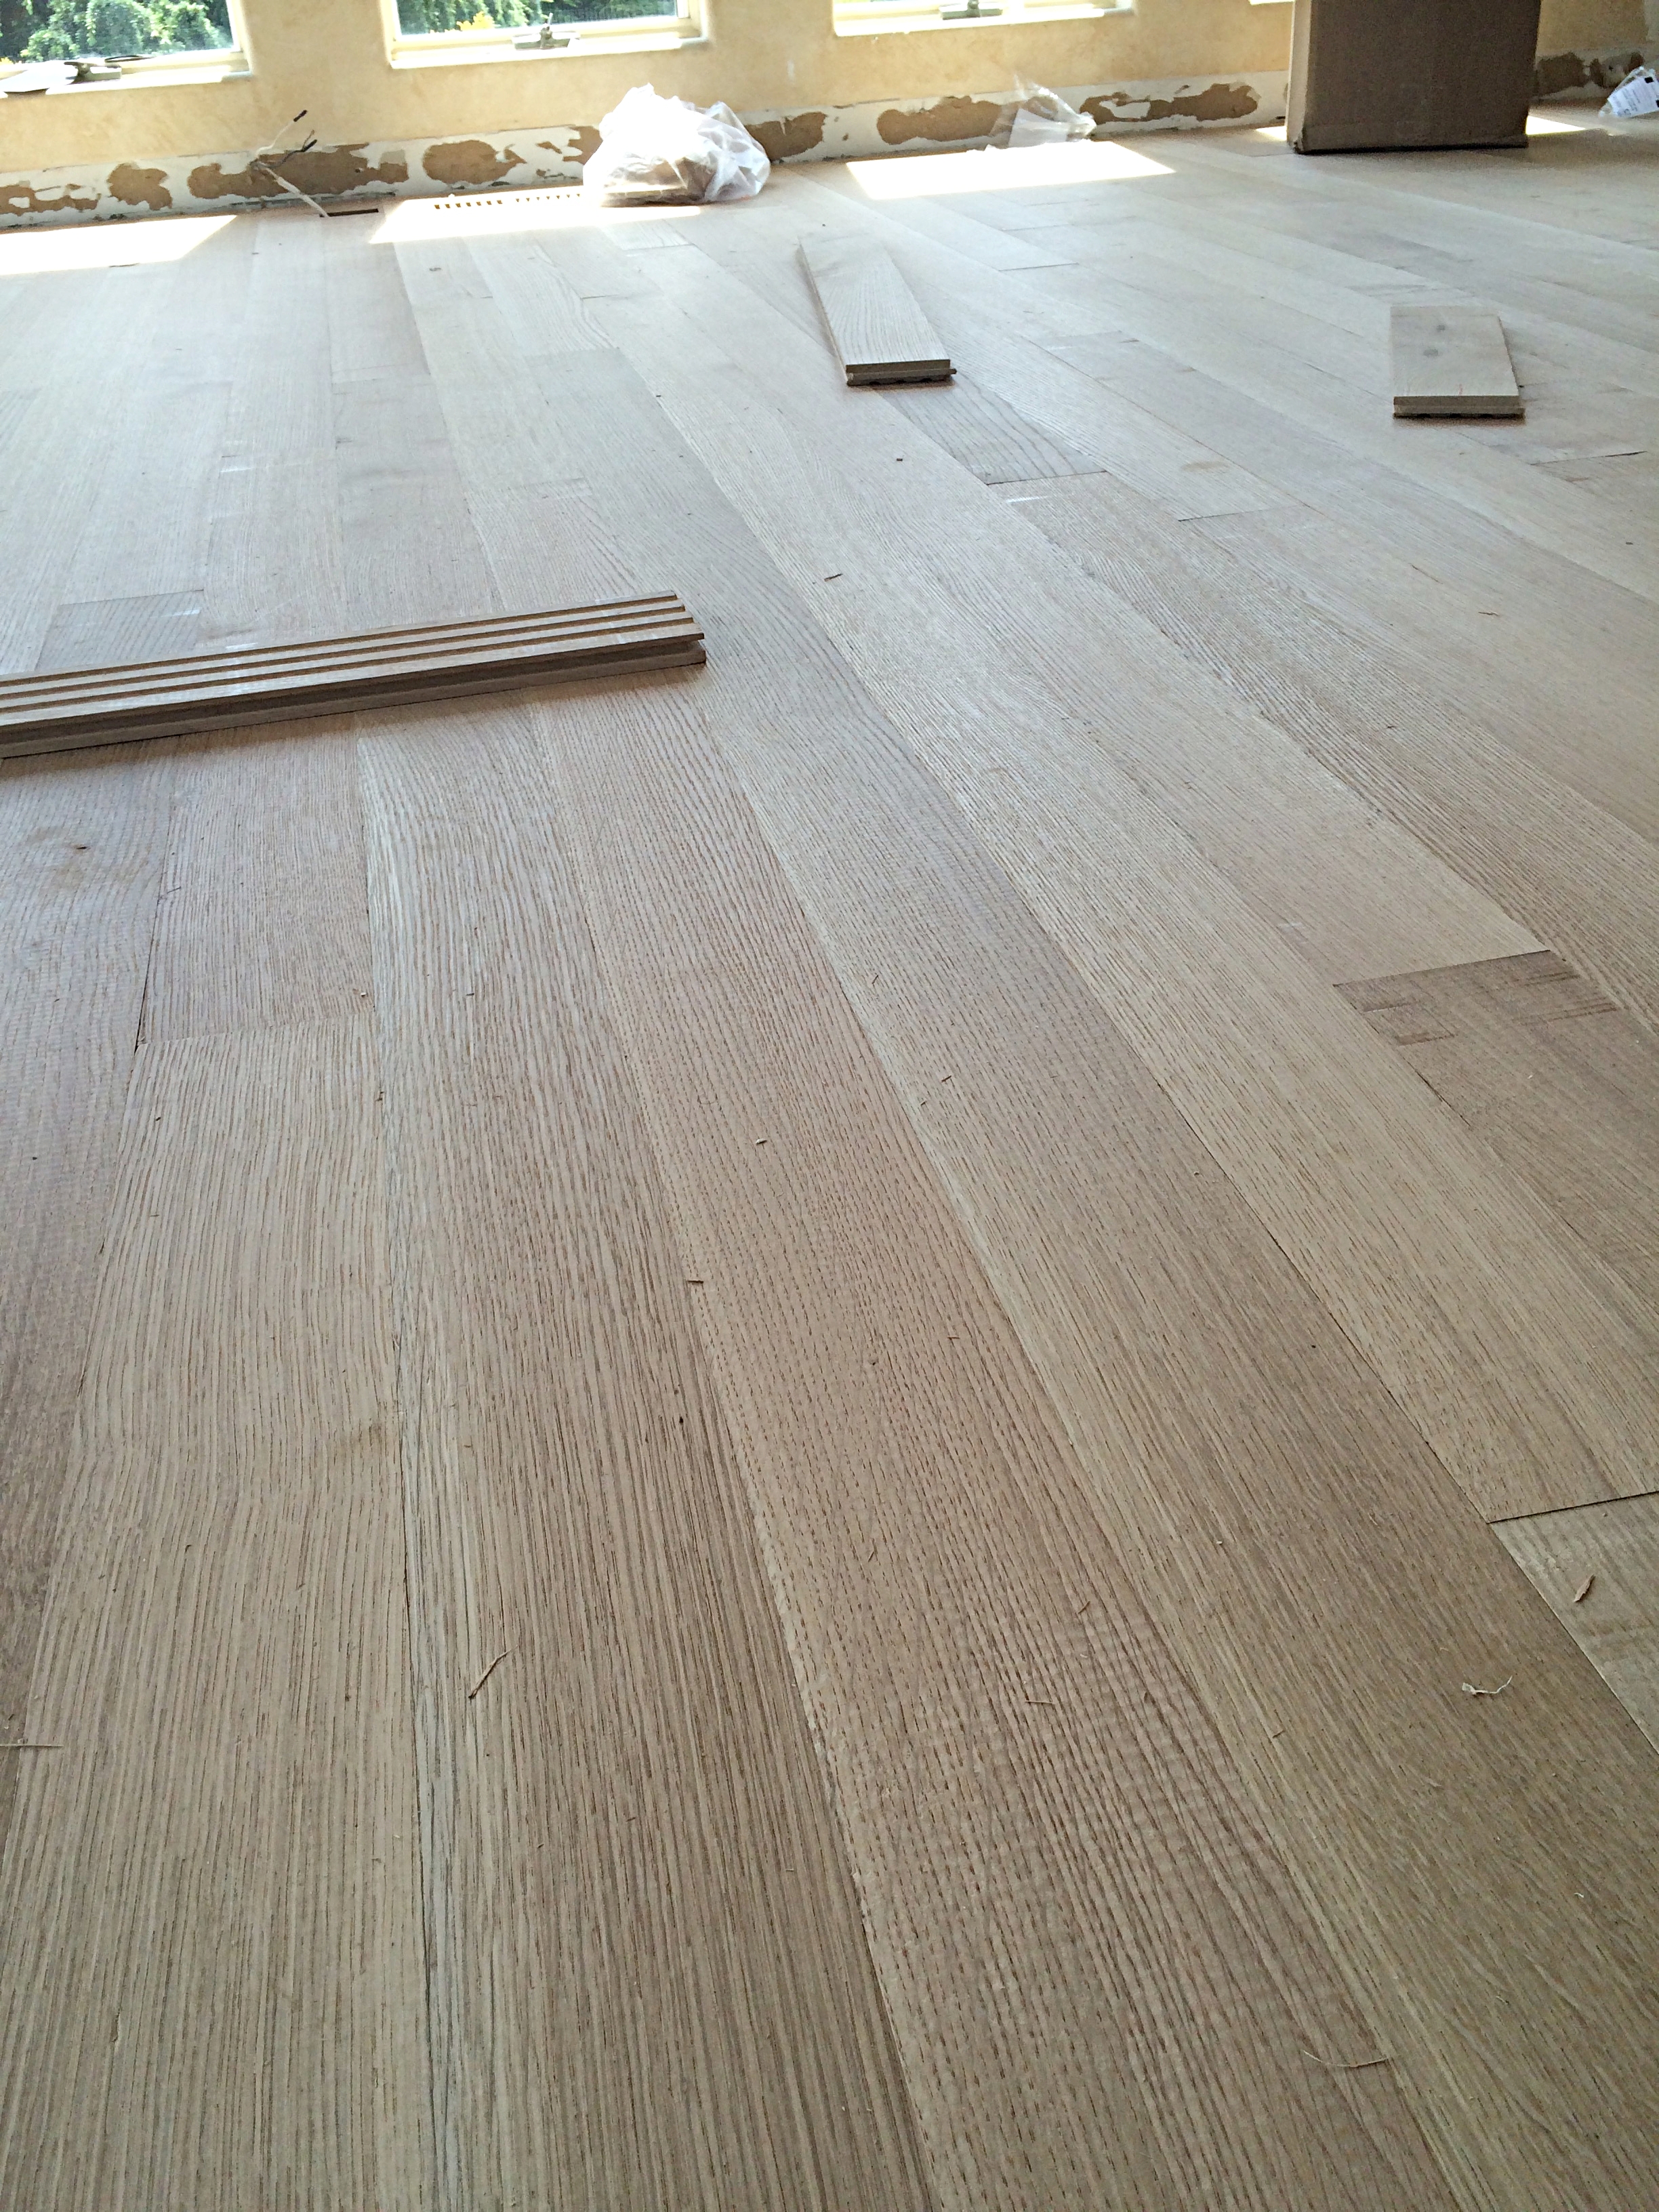 Rift And Quarter Sawn Hardwood Flooring The 411 Valenti Flooring